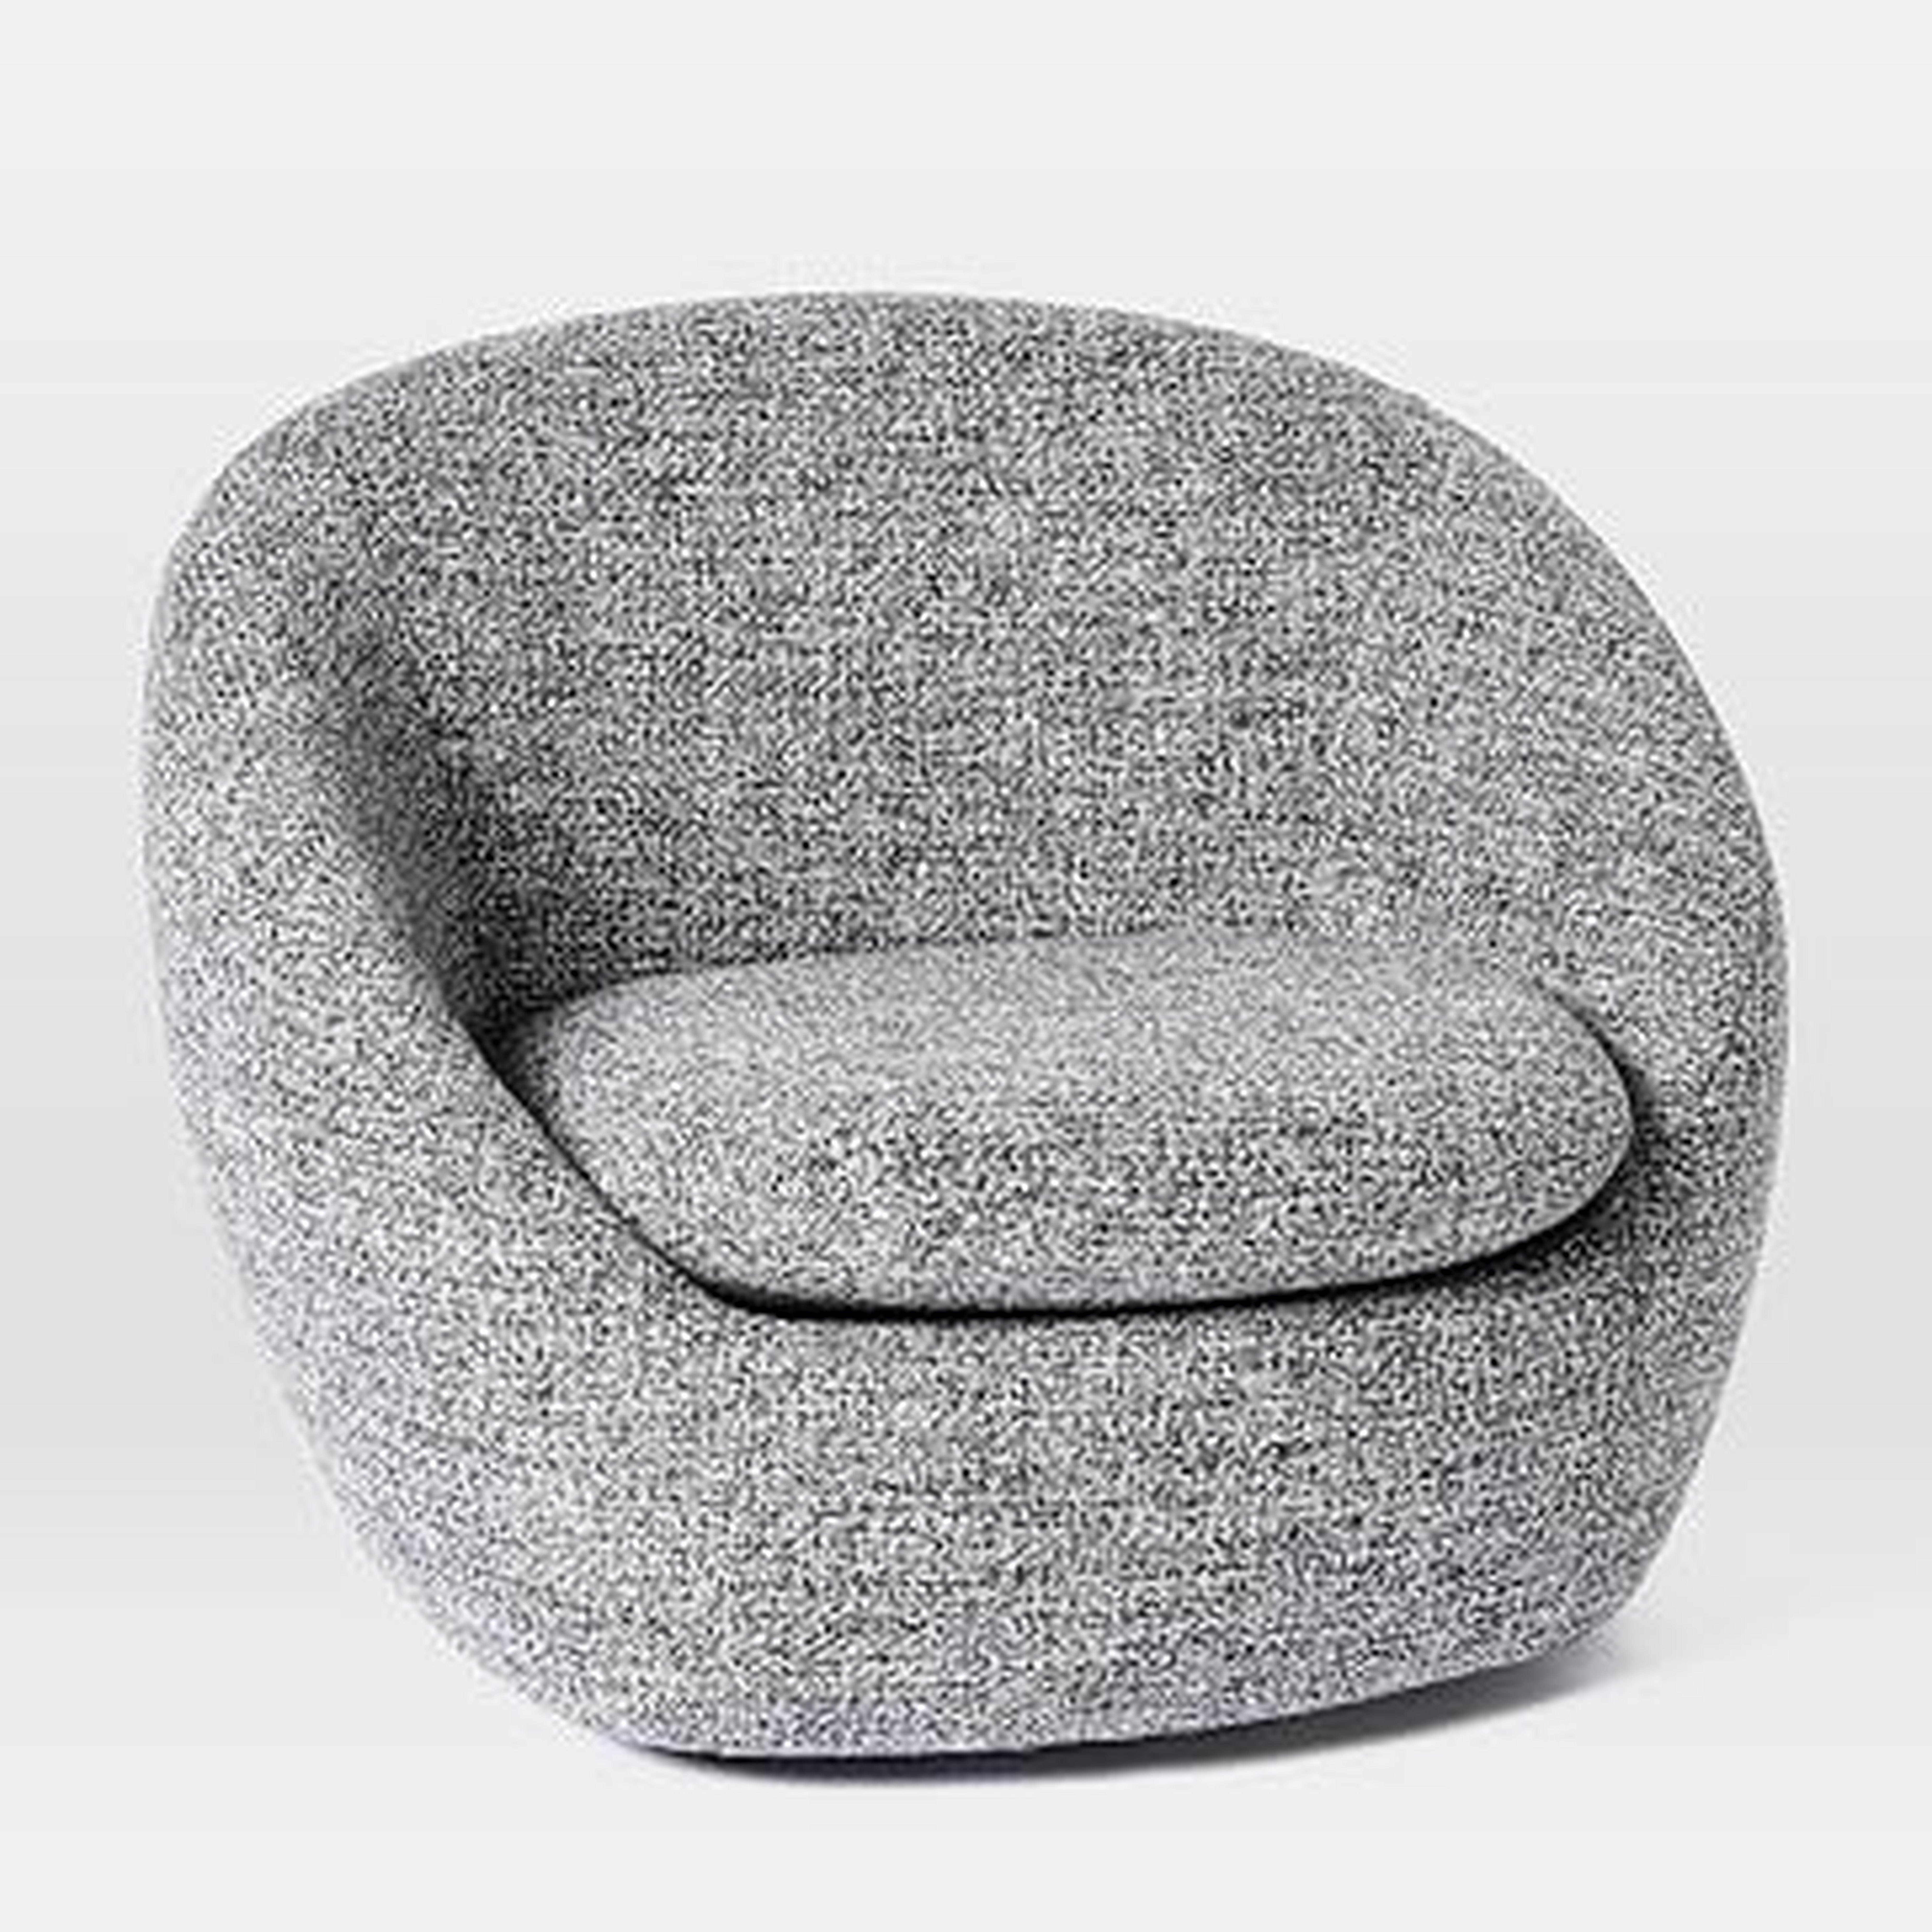 Cozy Swivel Chair, Chunky Melange, Charcoal - West Elm